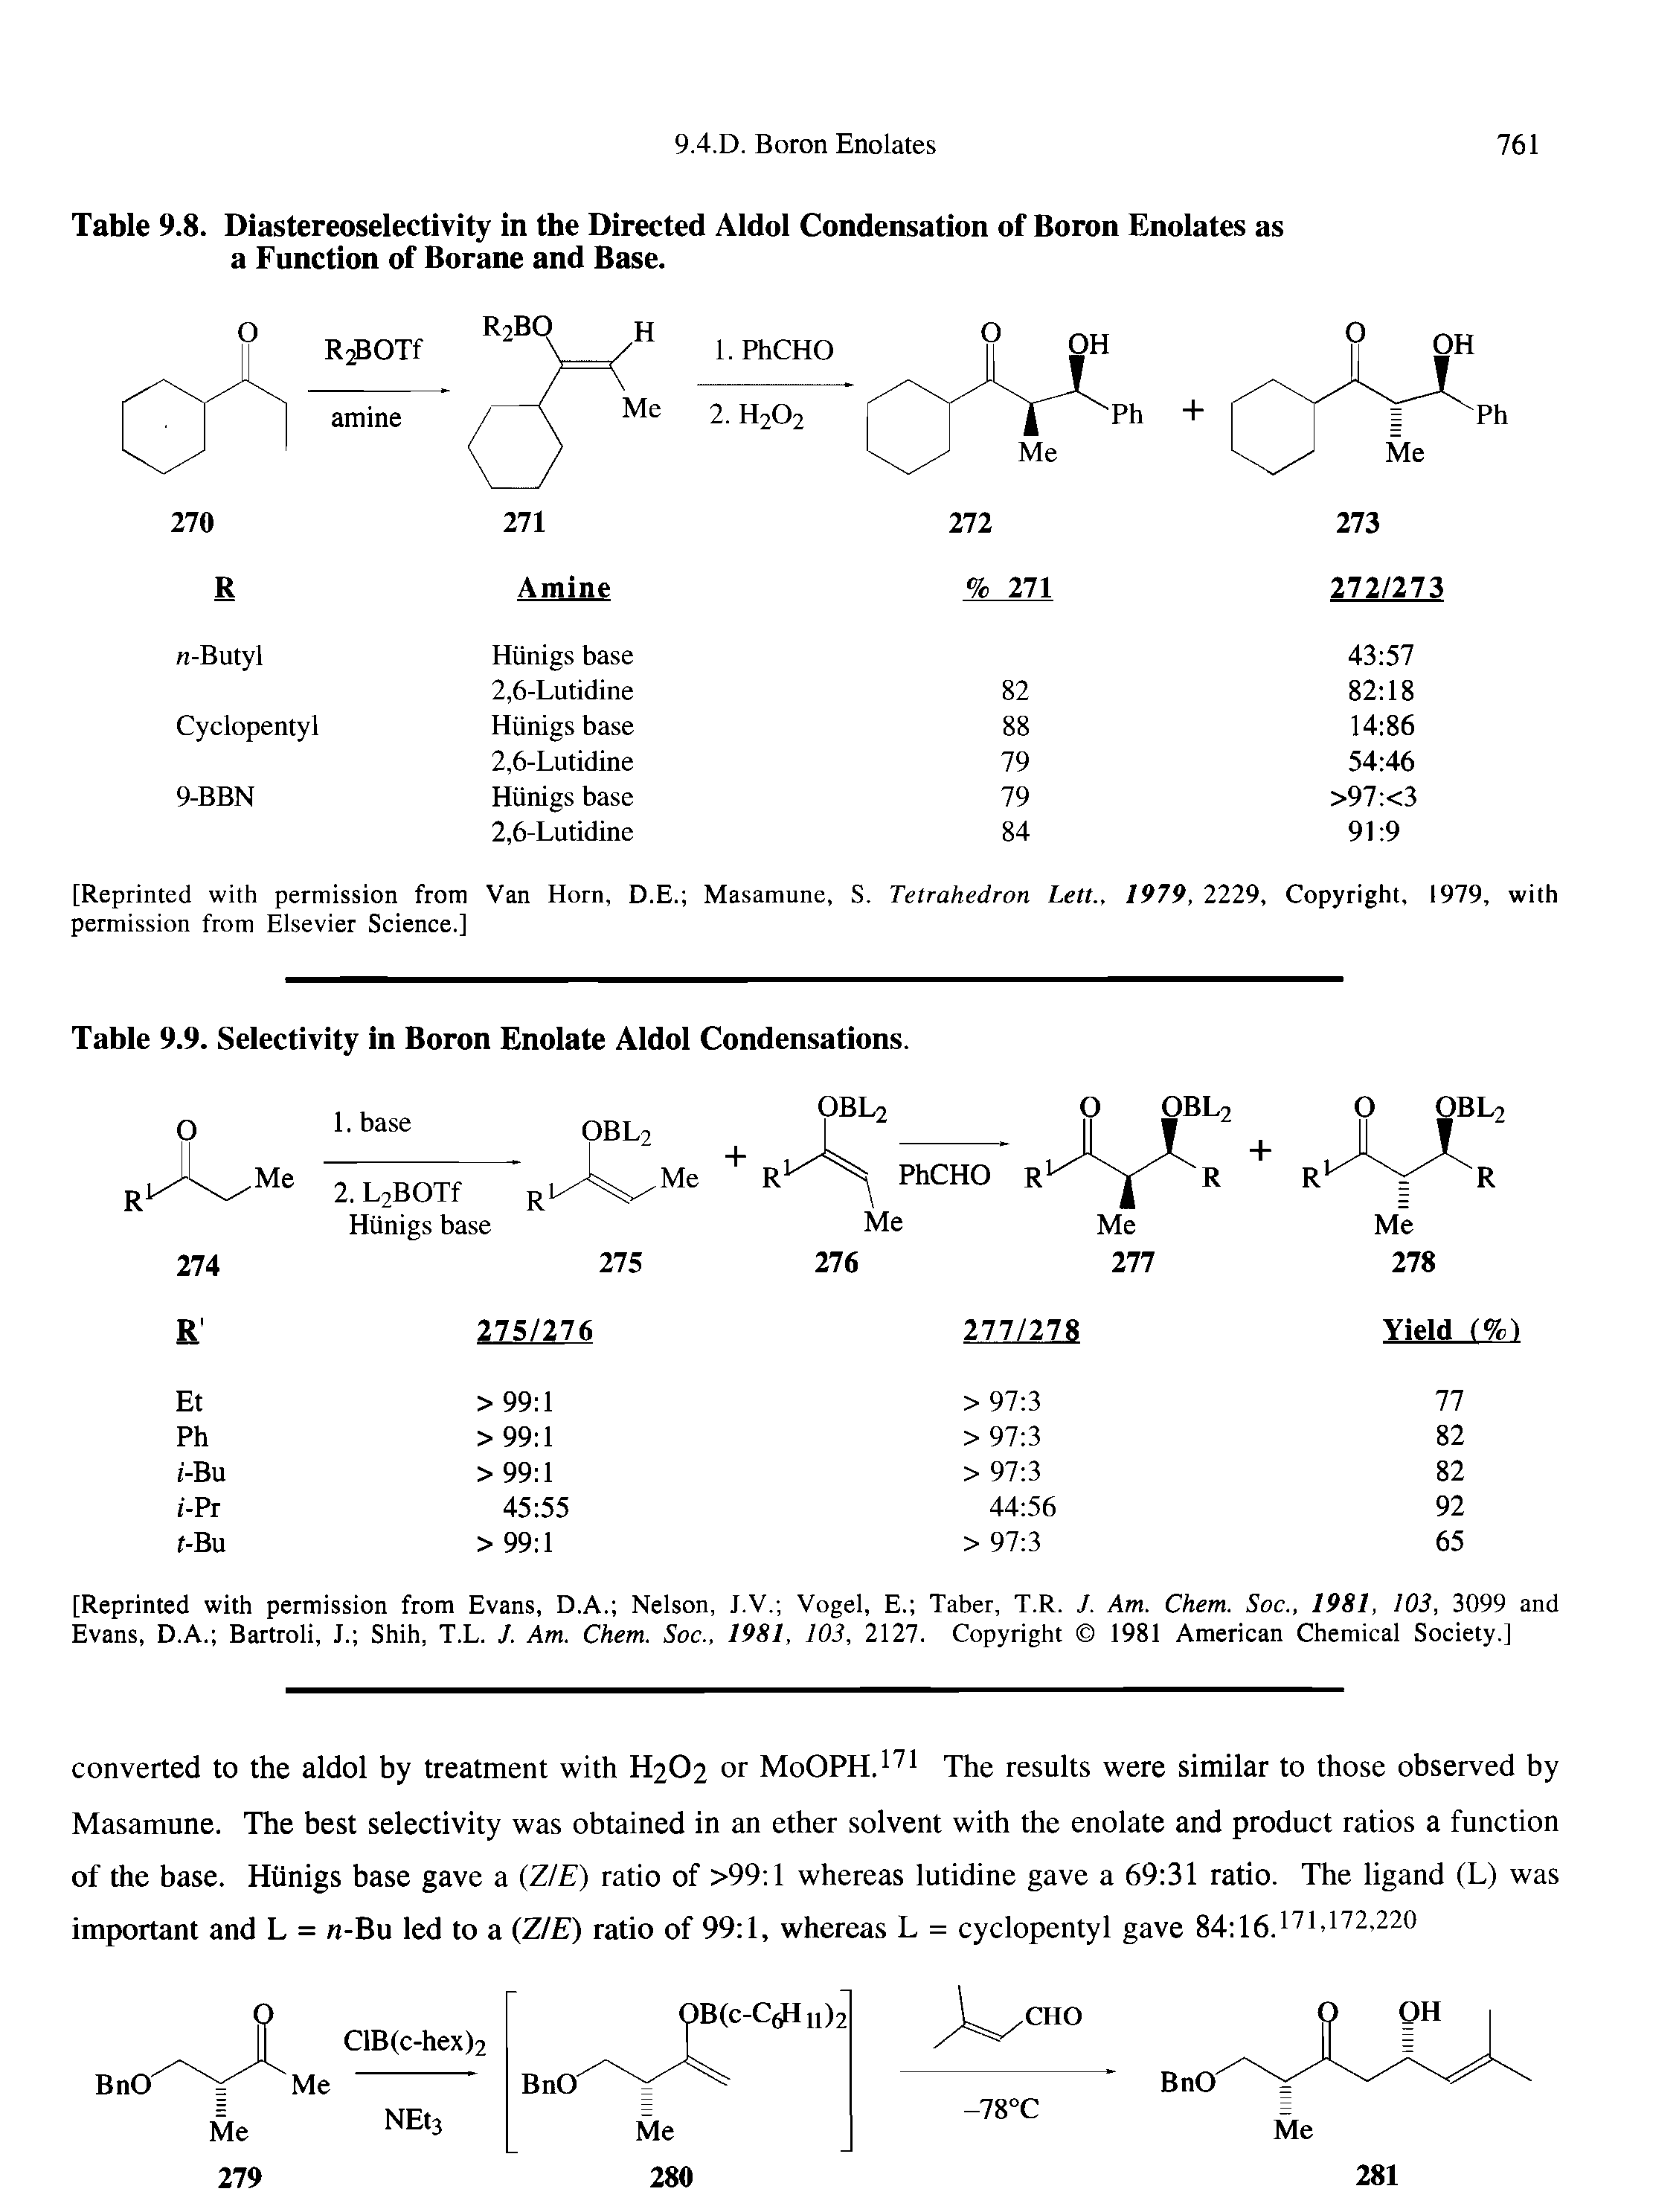 Table 9.9. Selectivity in Boron Enolate Aldol Condensations.